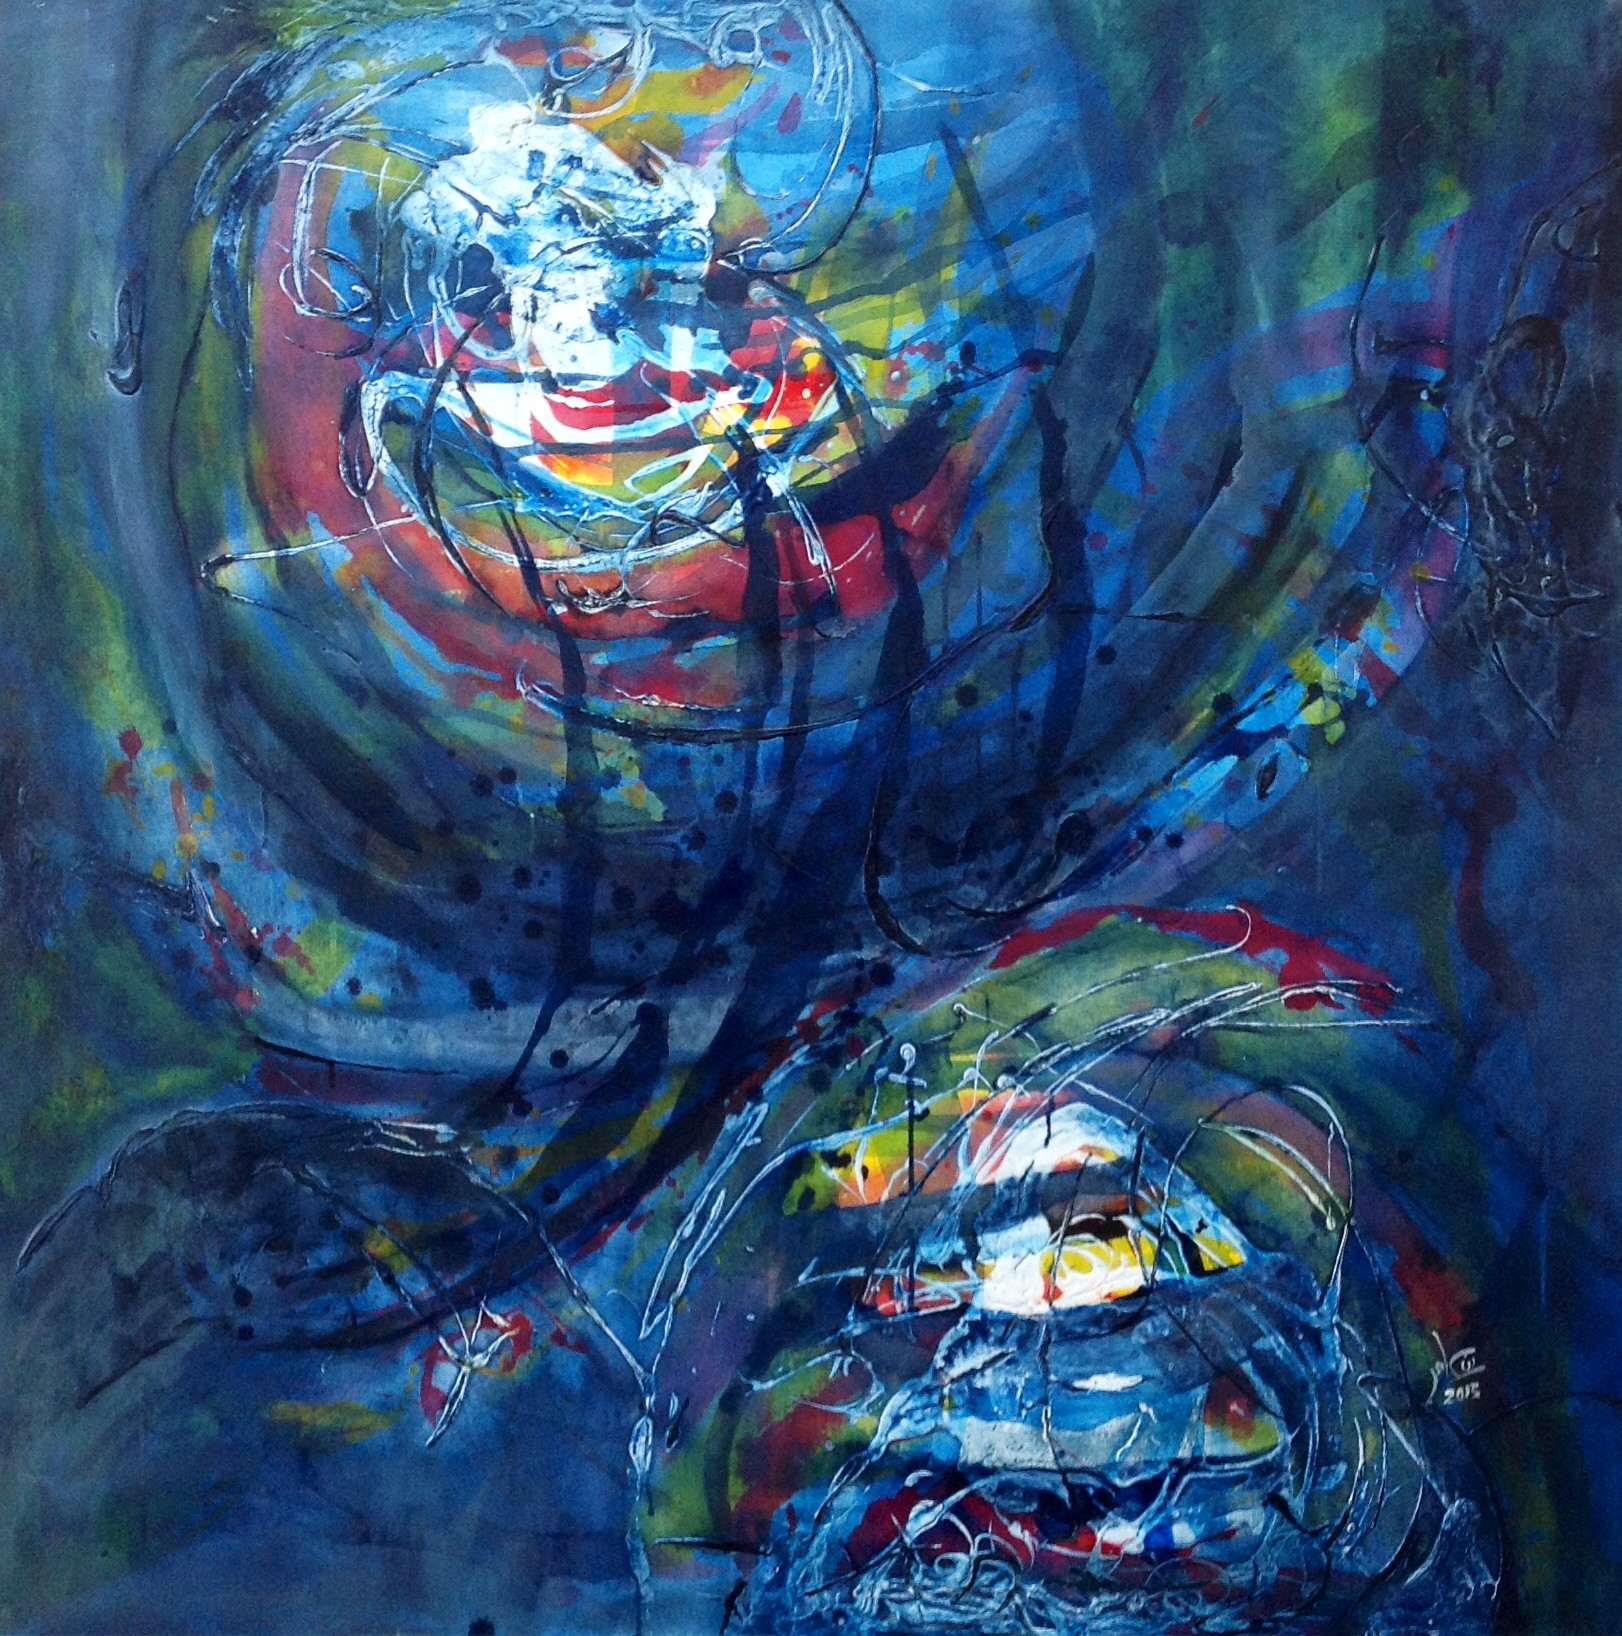 9. Cyclone. Acrylique sur toile. 110 x 110 cm 2015. JPG